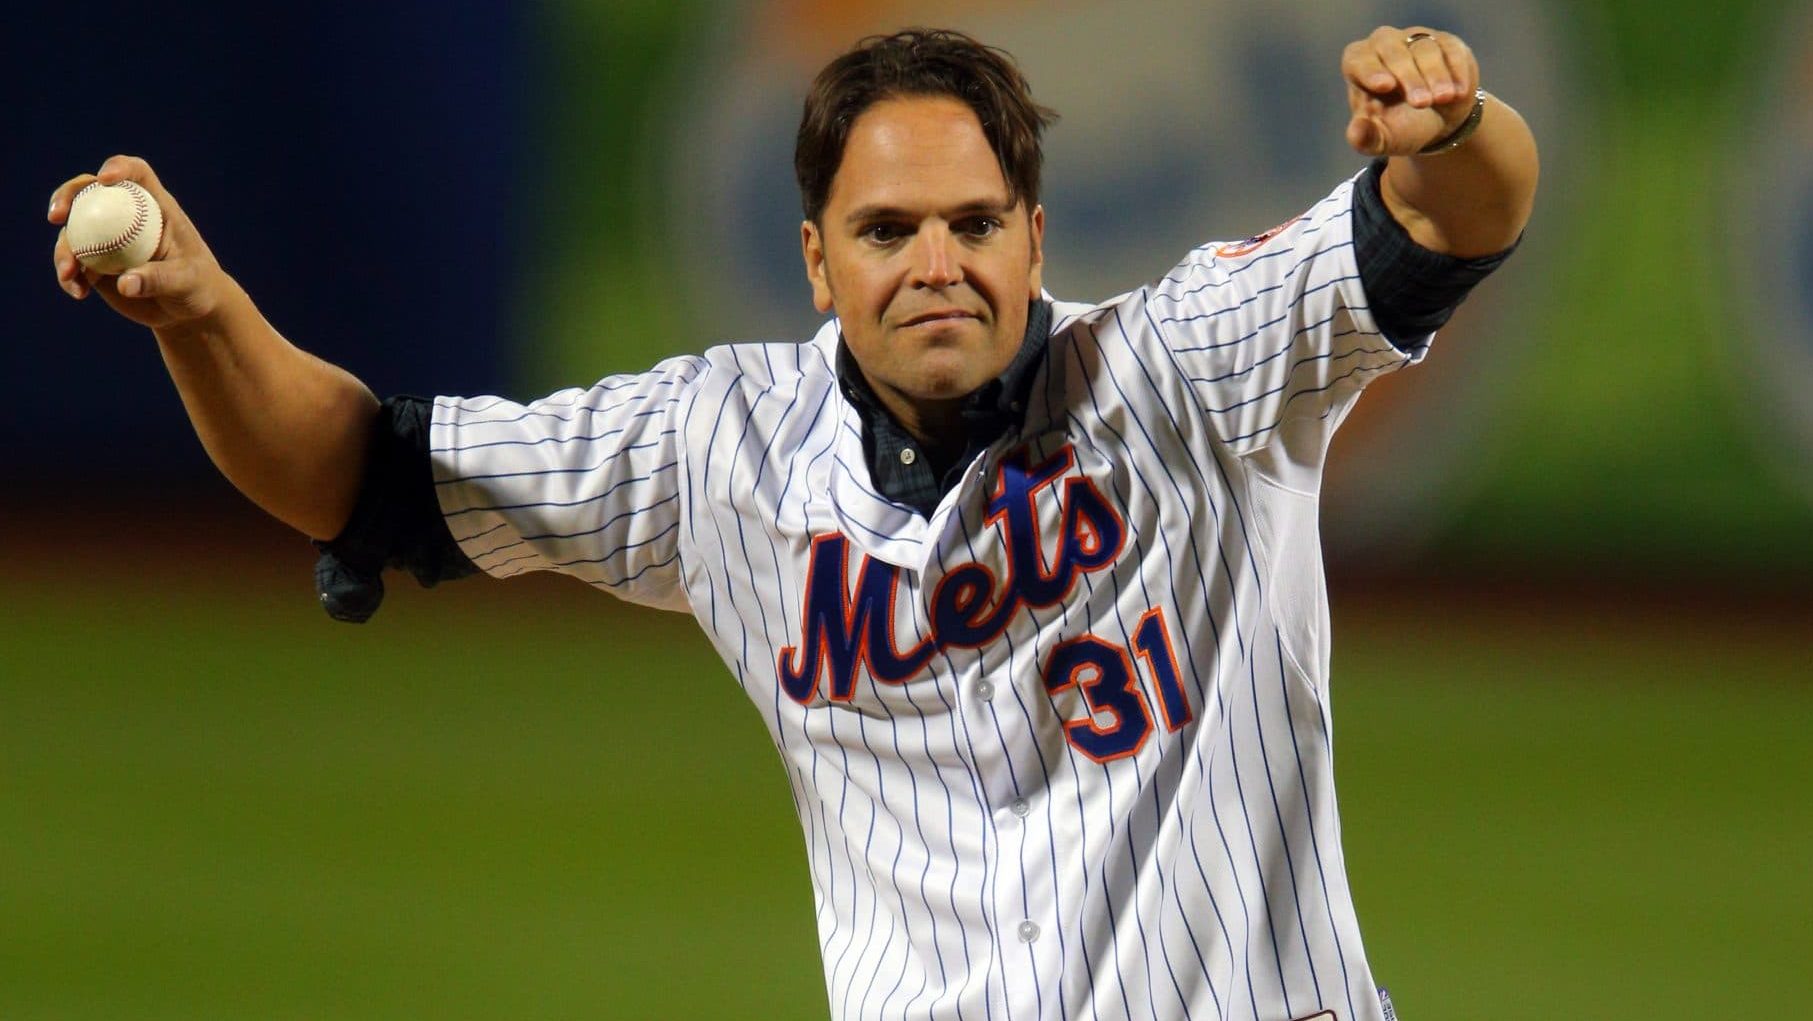 Mike Piazza, New York Mets